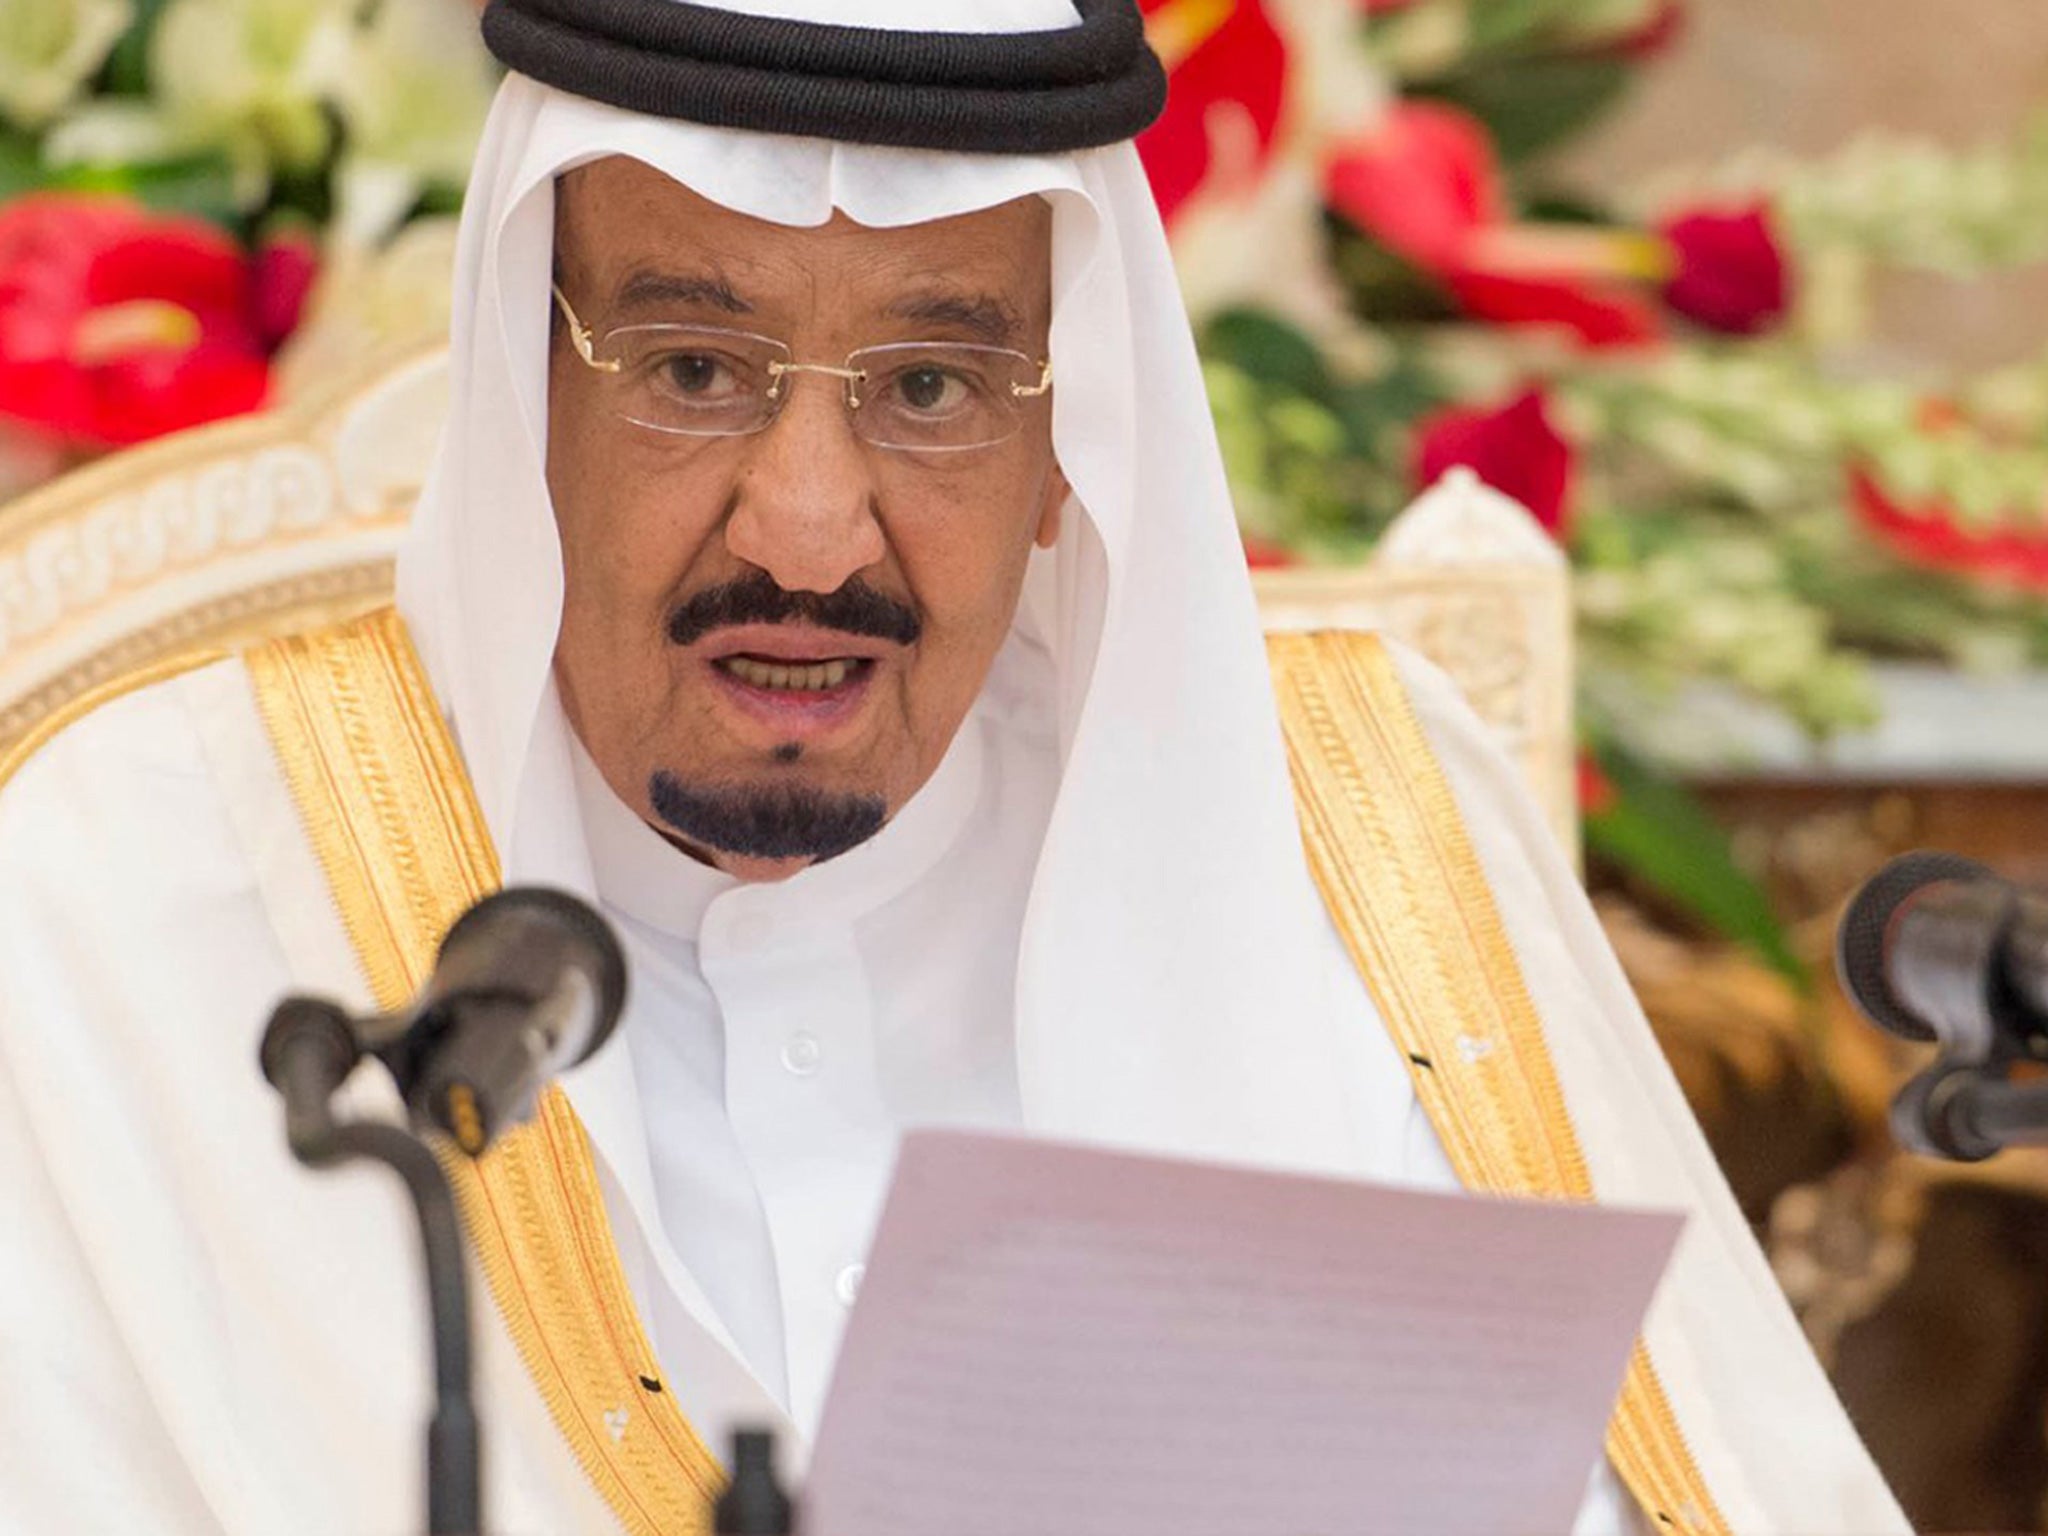 King Salman has ordered "a revision" of hajj organisation